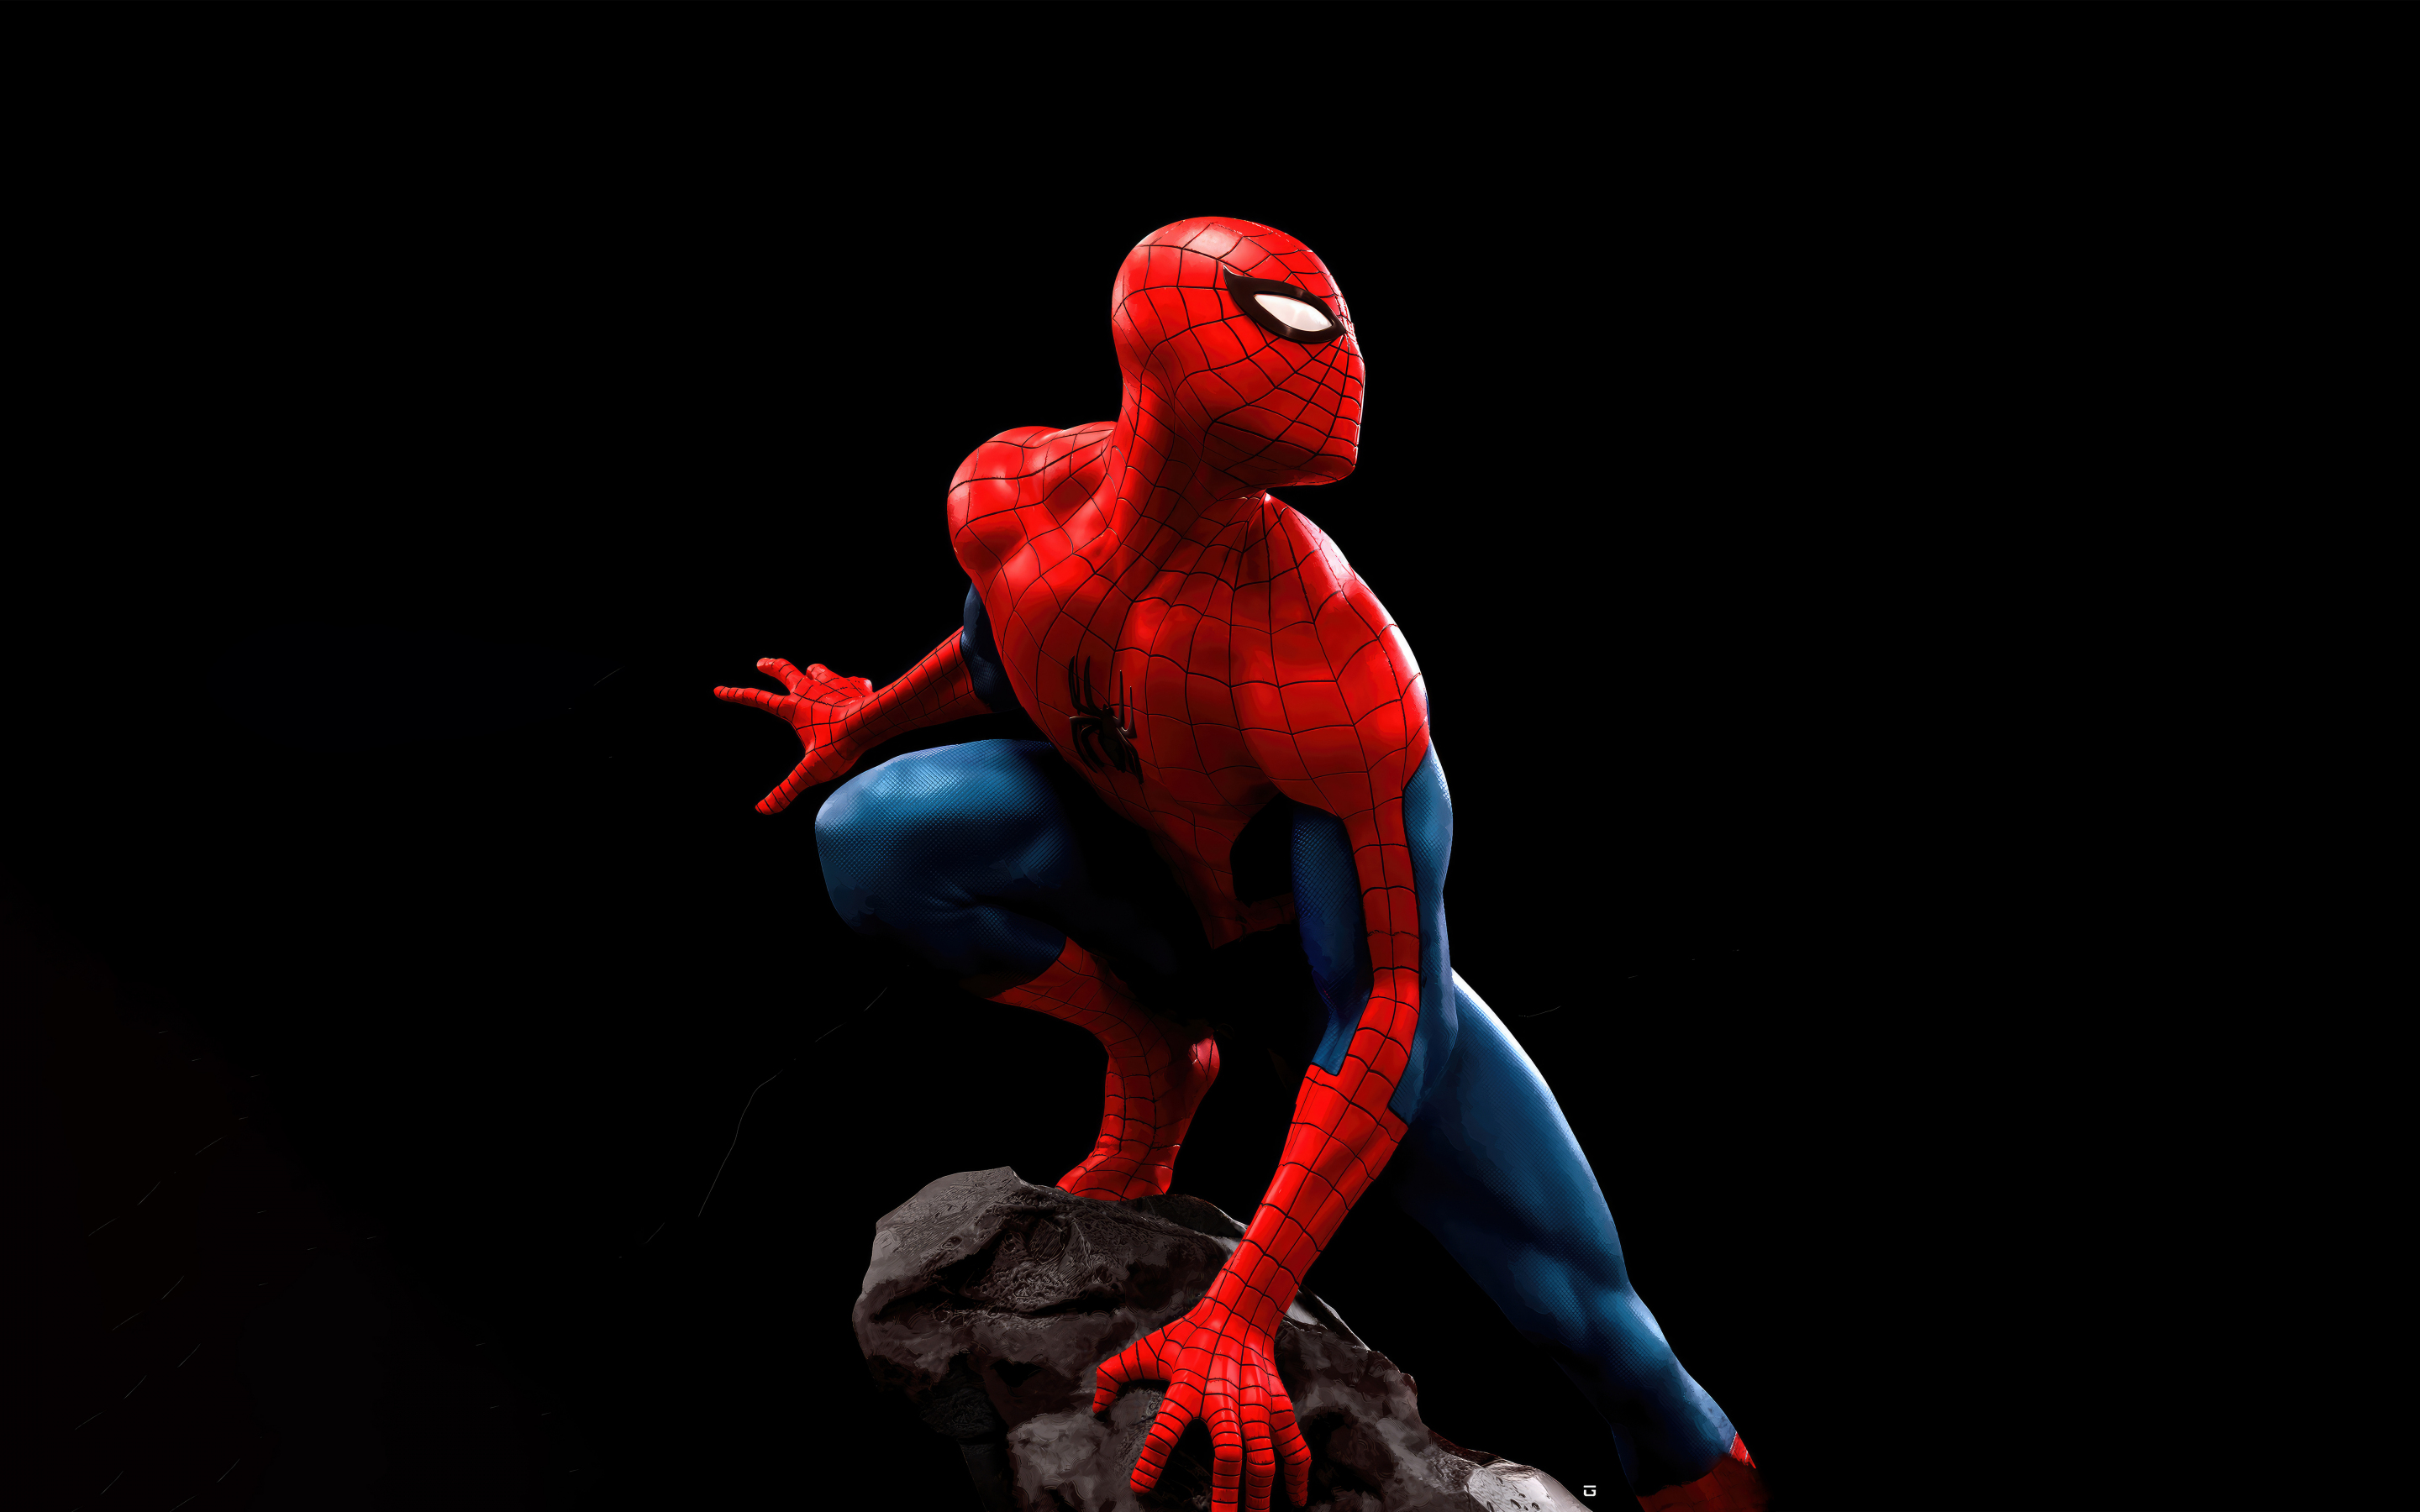 The Amazing spider-man, OLED art, dark, 2880x1800 wallpaper